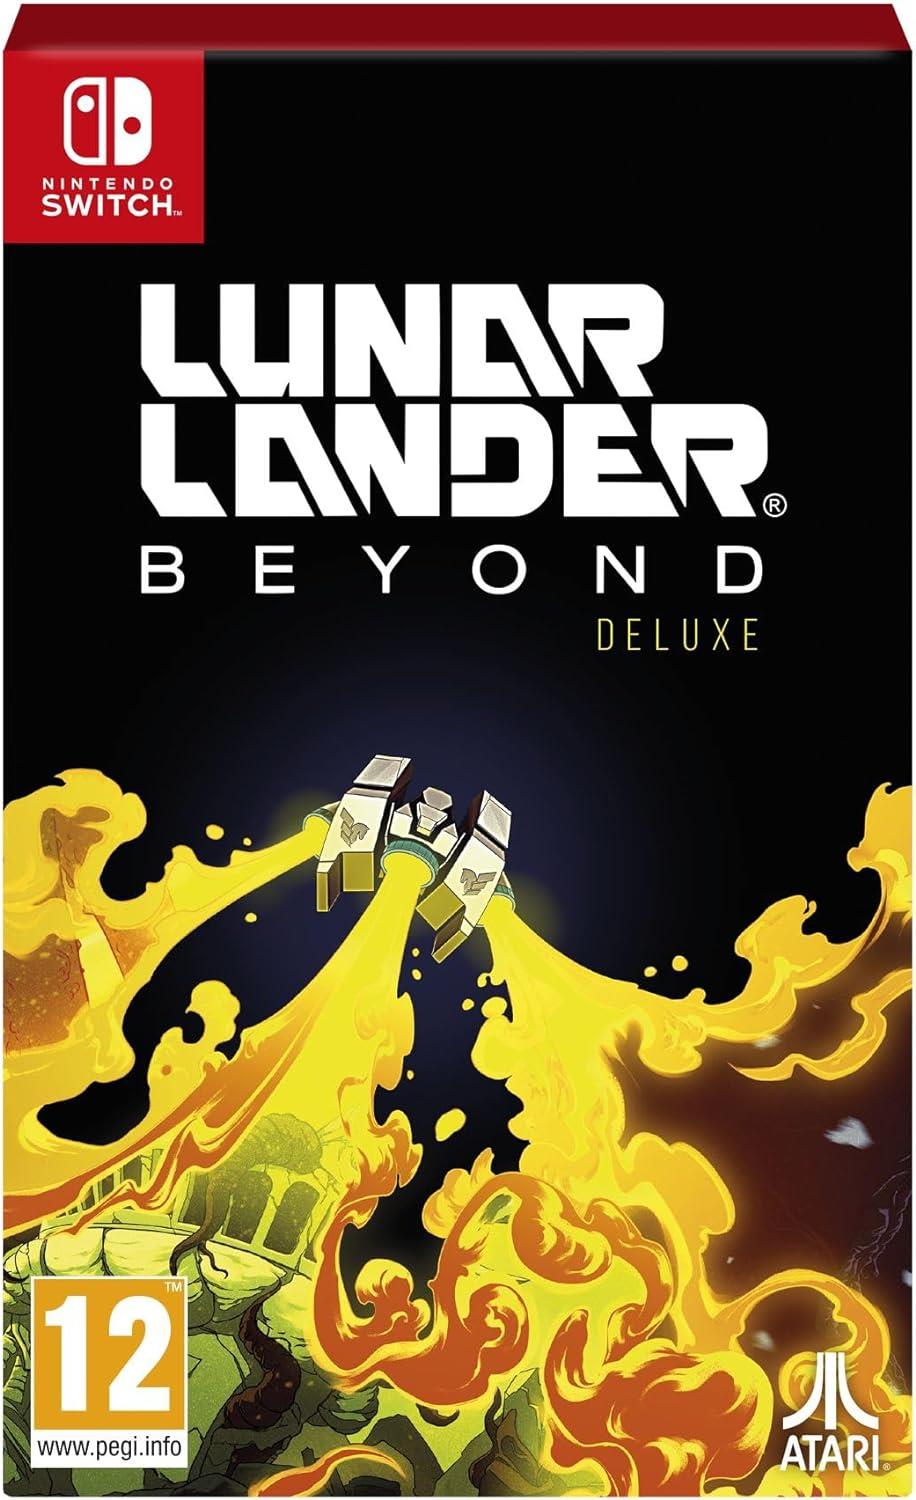 Lunar Lander Beyond Deluxe Nintendo Switch Game